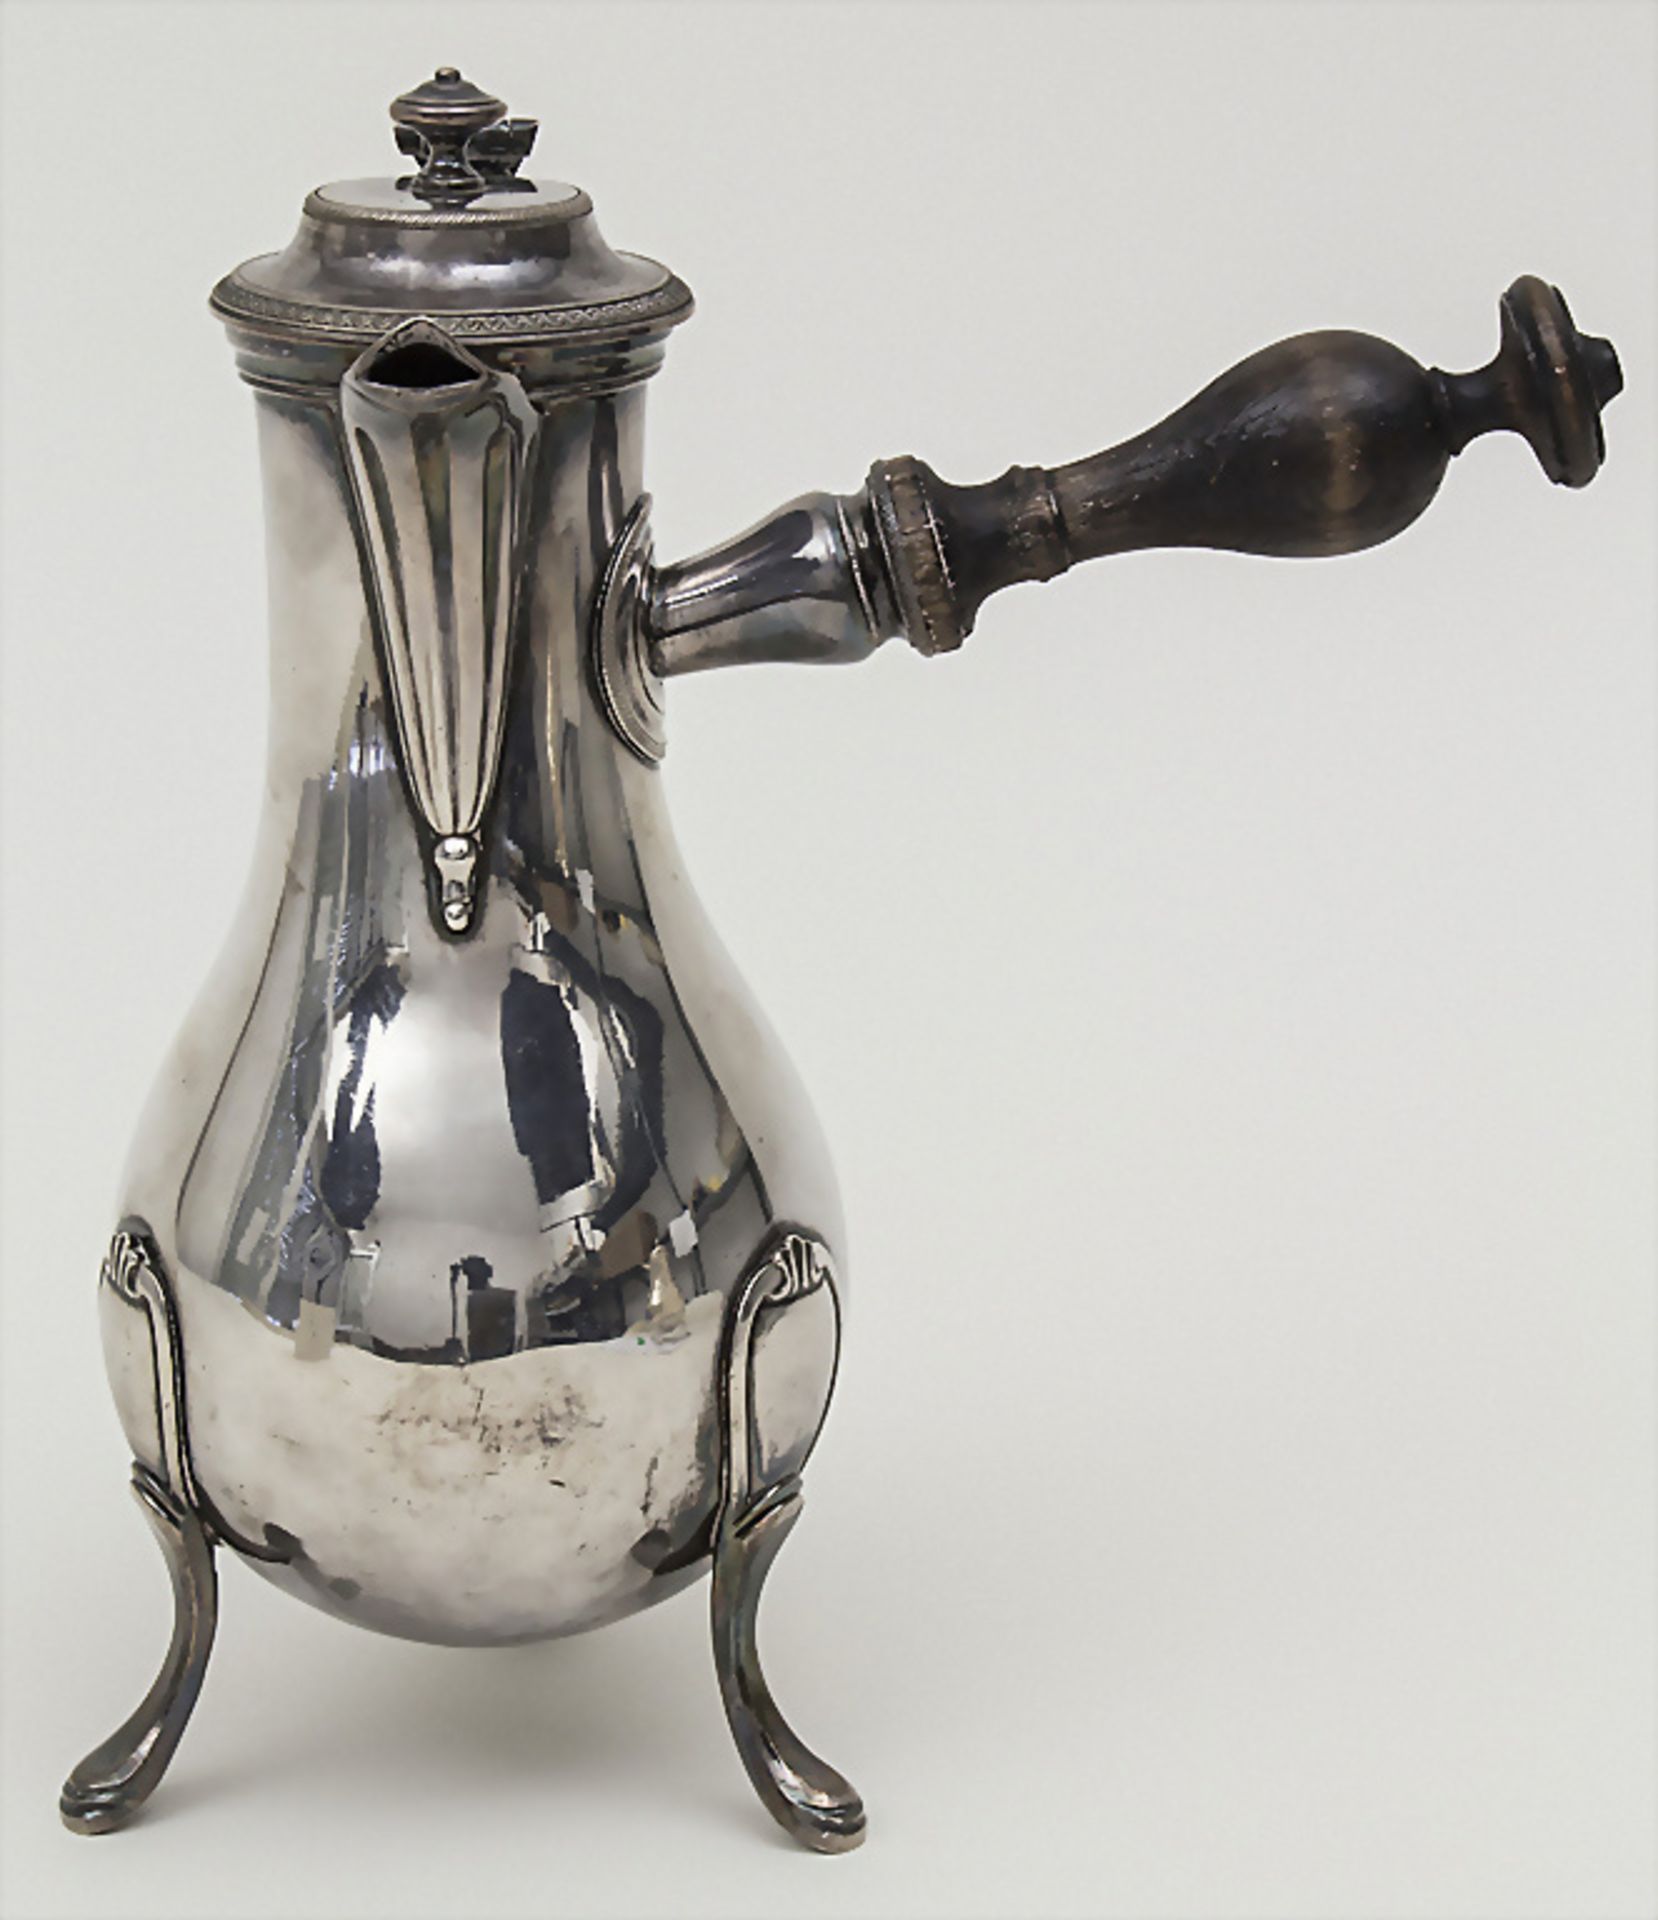 Empire Kanne / A silver Empire coffee pot, Nicolas-Richard Masson, Paris, 1806-1809